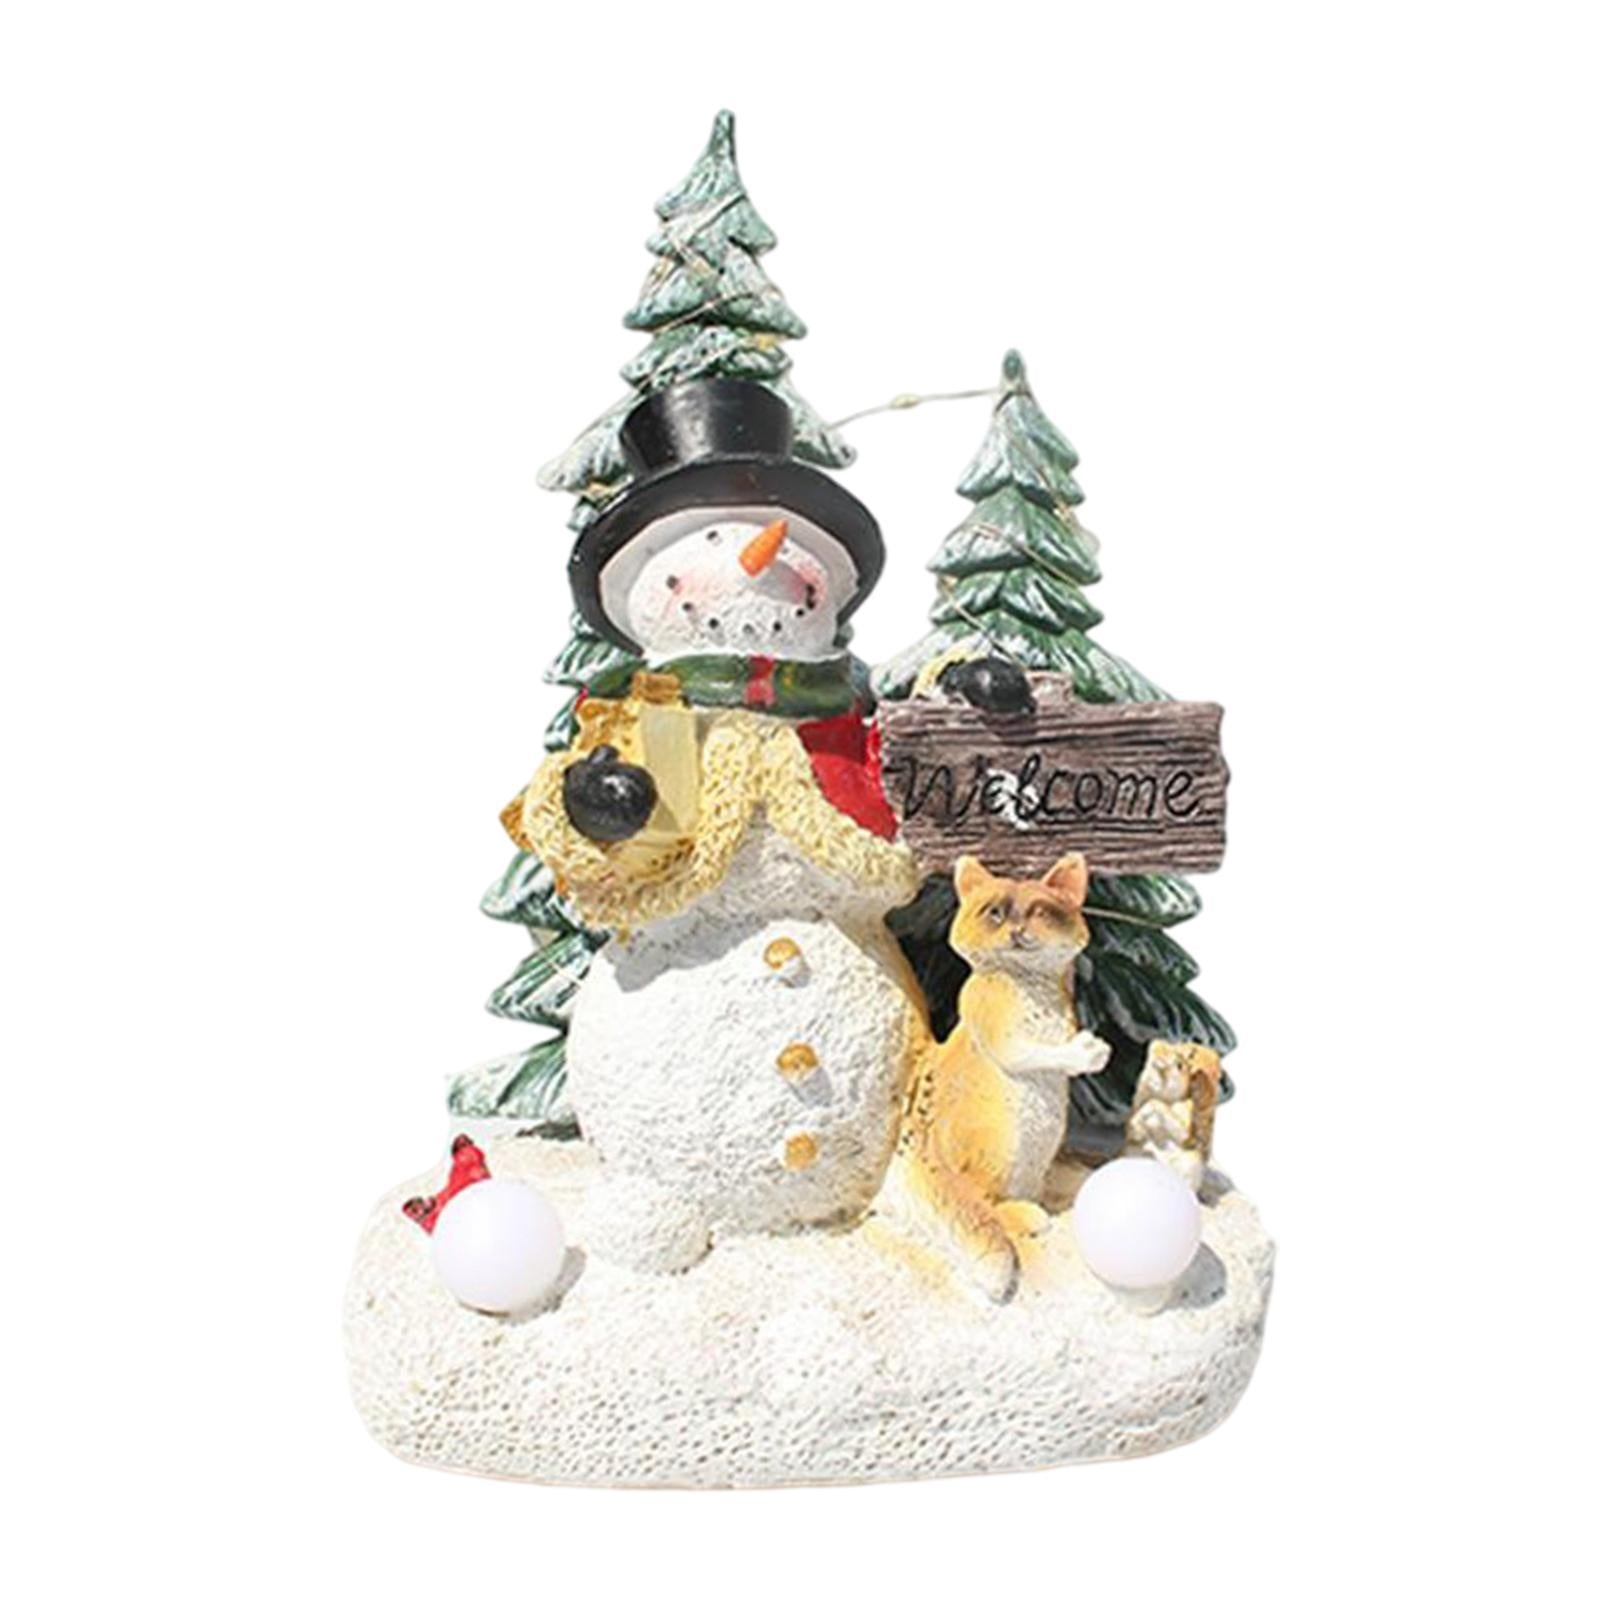 Lighted Christmas Miniature Figurines Toys DIY Accessories Doll House Decor Snowman